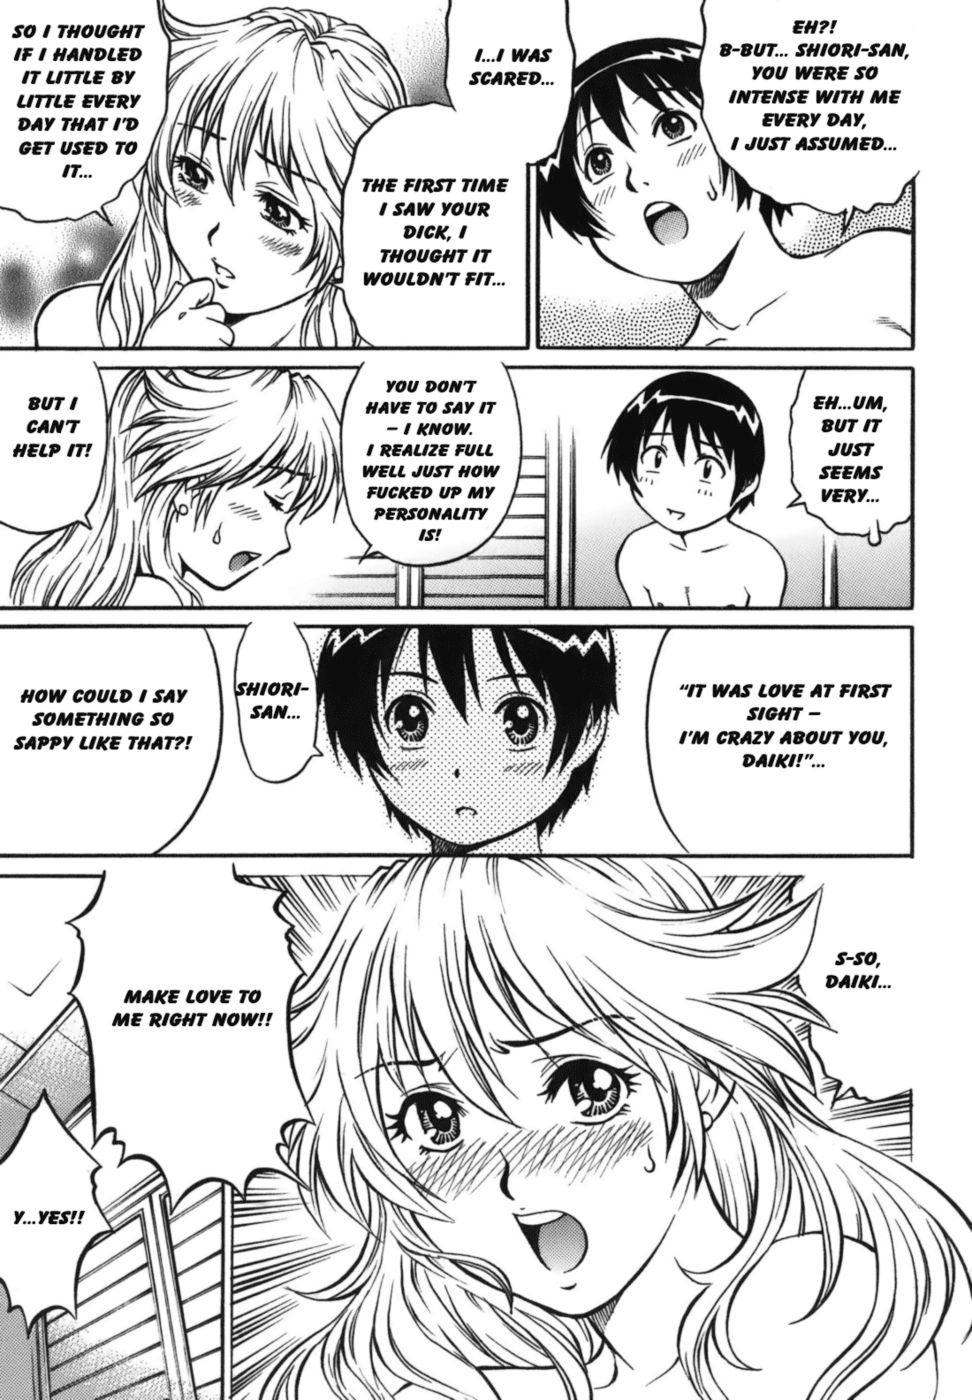 Hentai Manga Comic-Awkward Girl vs Virginal Masochist Boy-Read-15